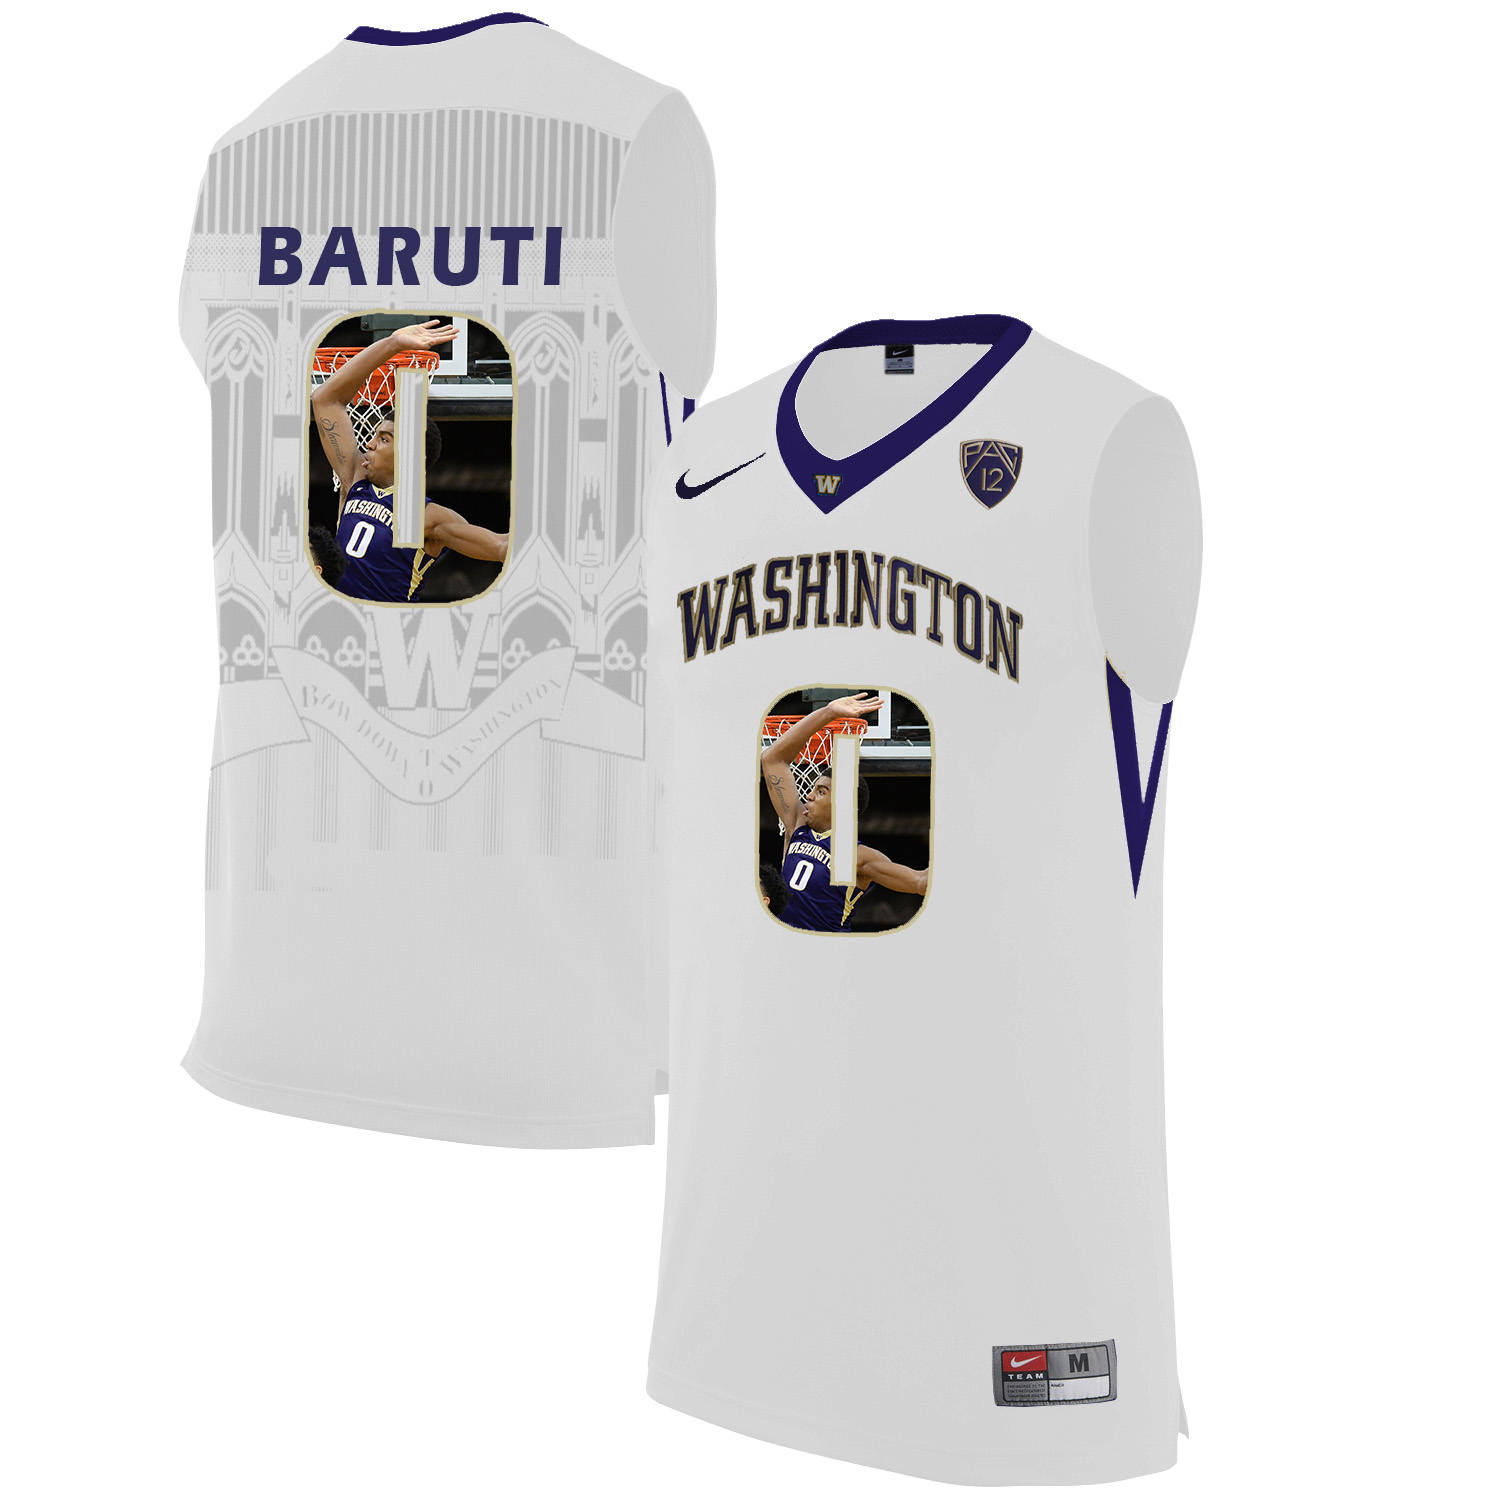 Washington Huskies 0 Bitumba Baruti White With Portait College Basketball Jersey